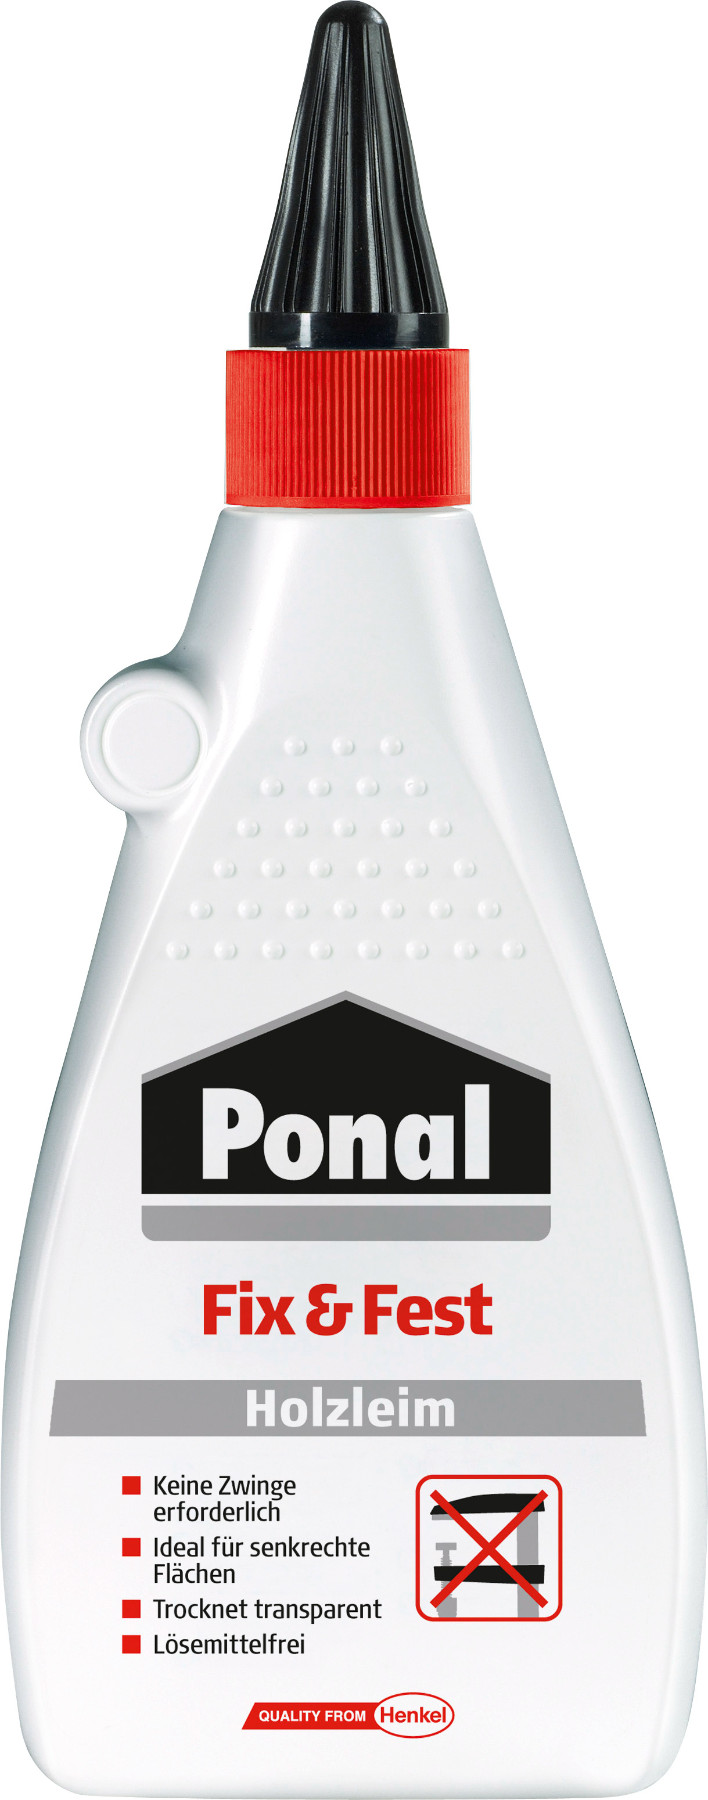 Ponal Fix & Fest 100g Flasche  